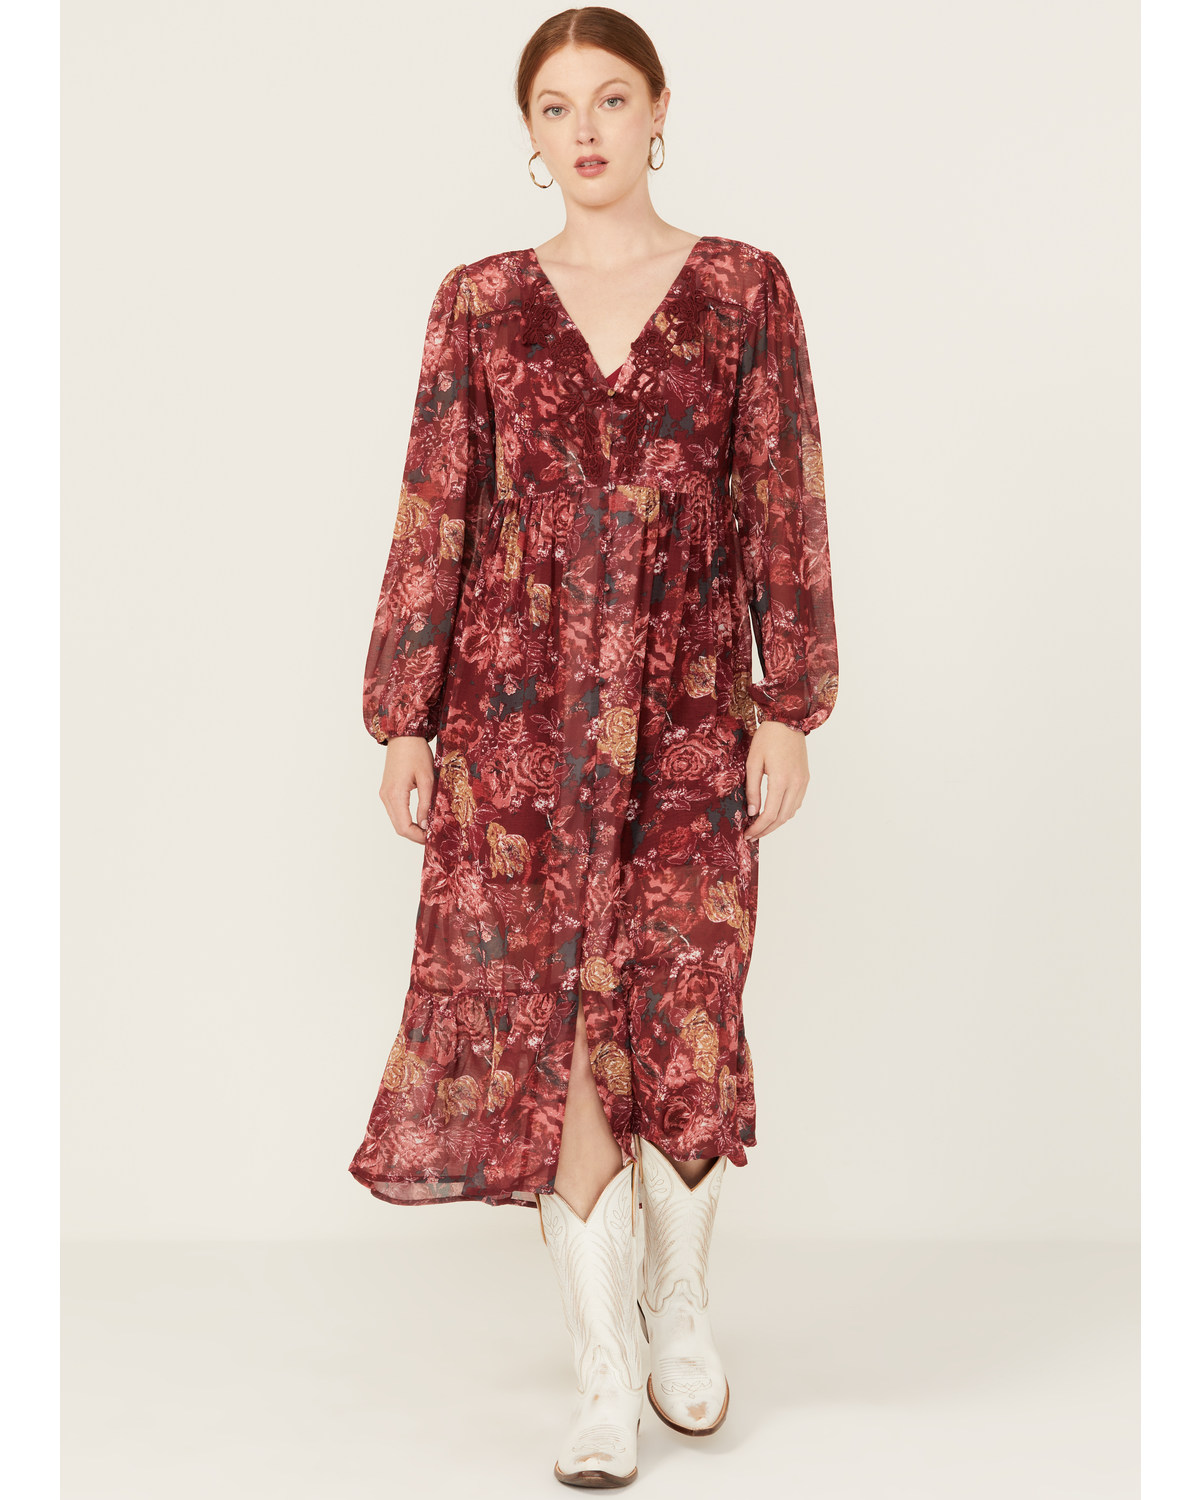 Beyond The Radar Women's Floral Print Crochet Trim Dress